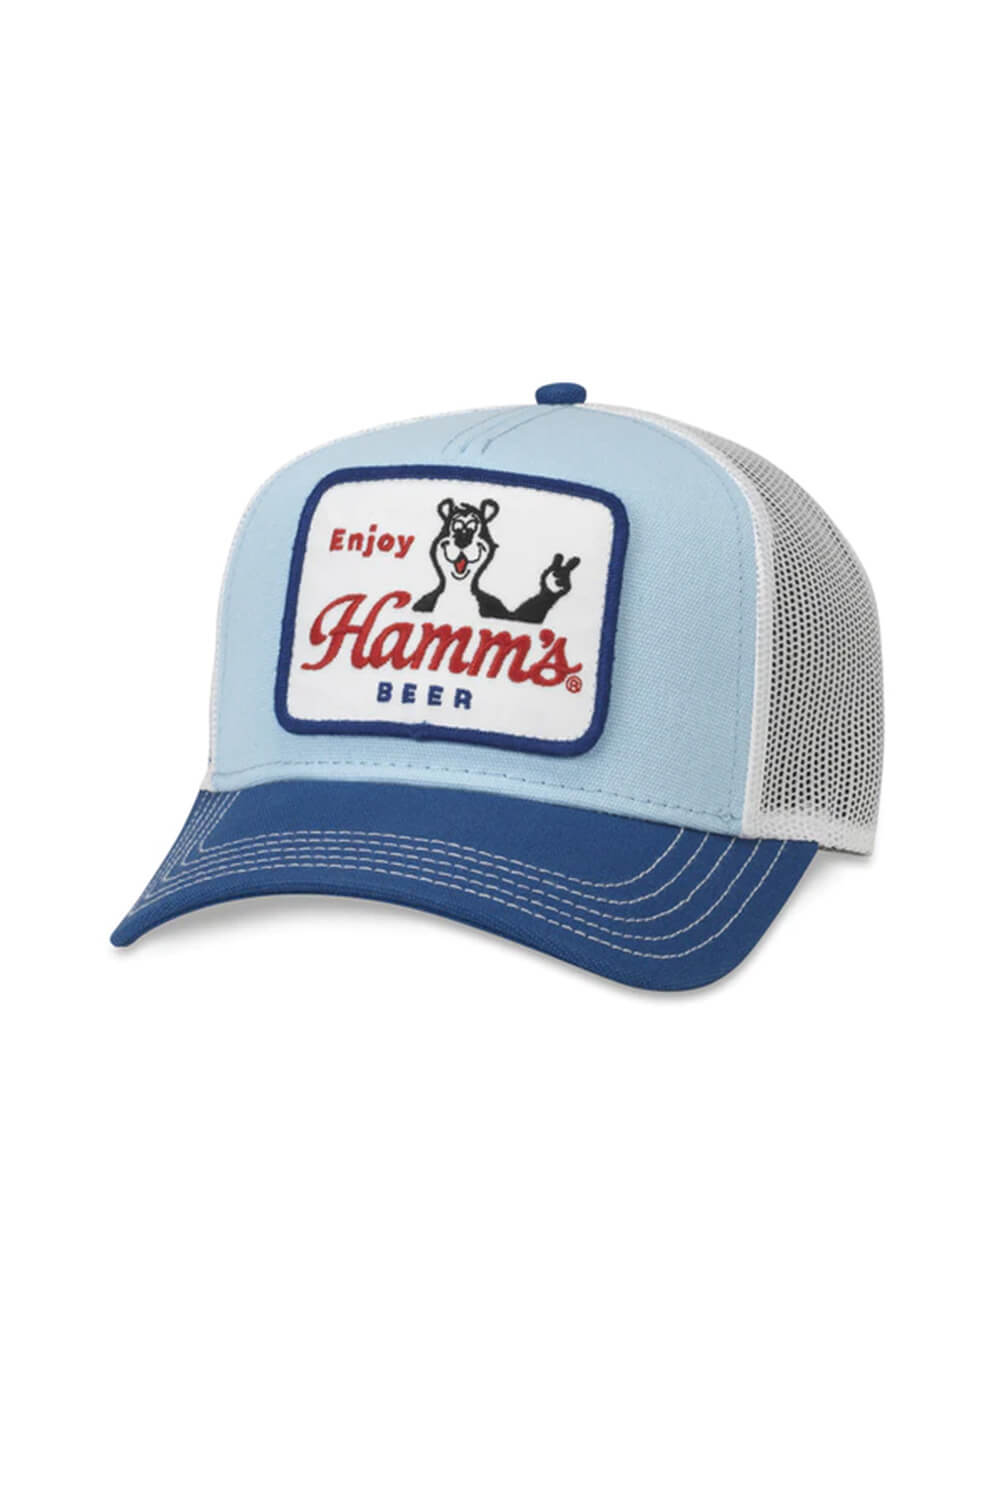 American Needle Lightweight Rope Hamms Hat